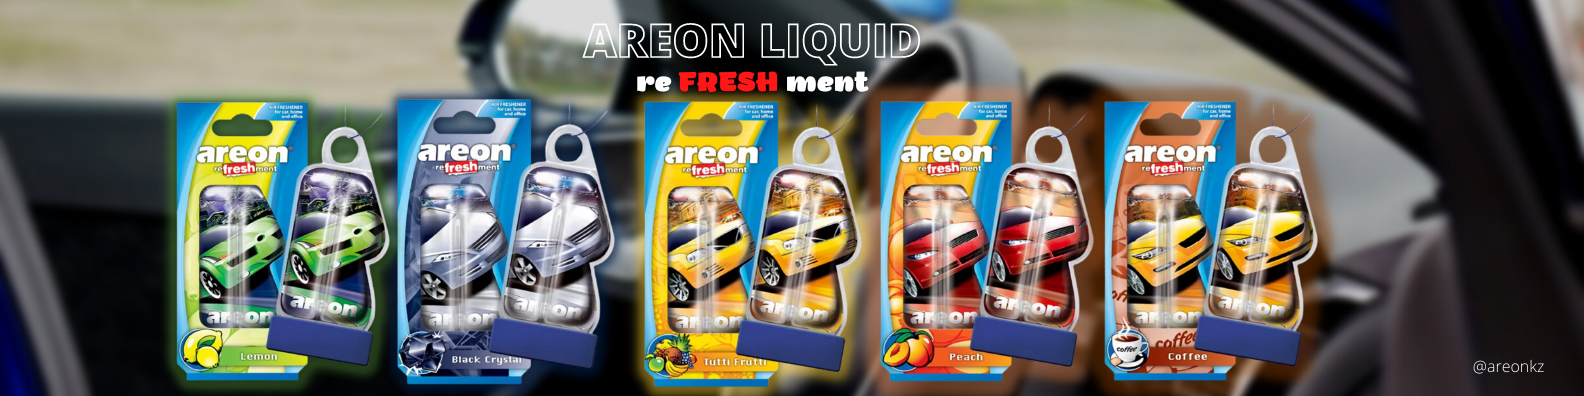 Areon Liquid